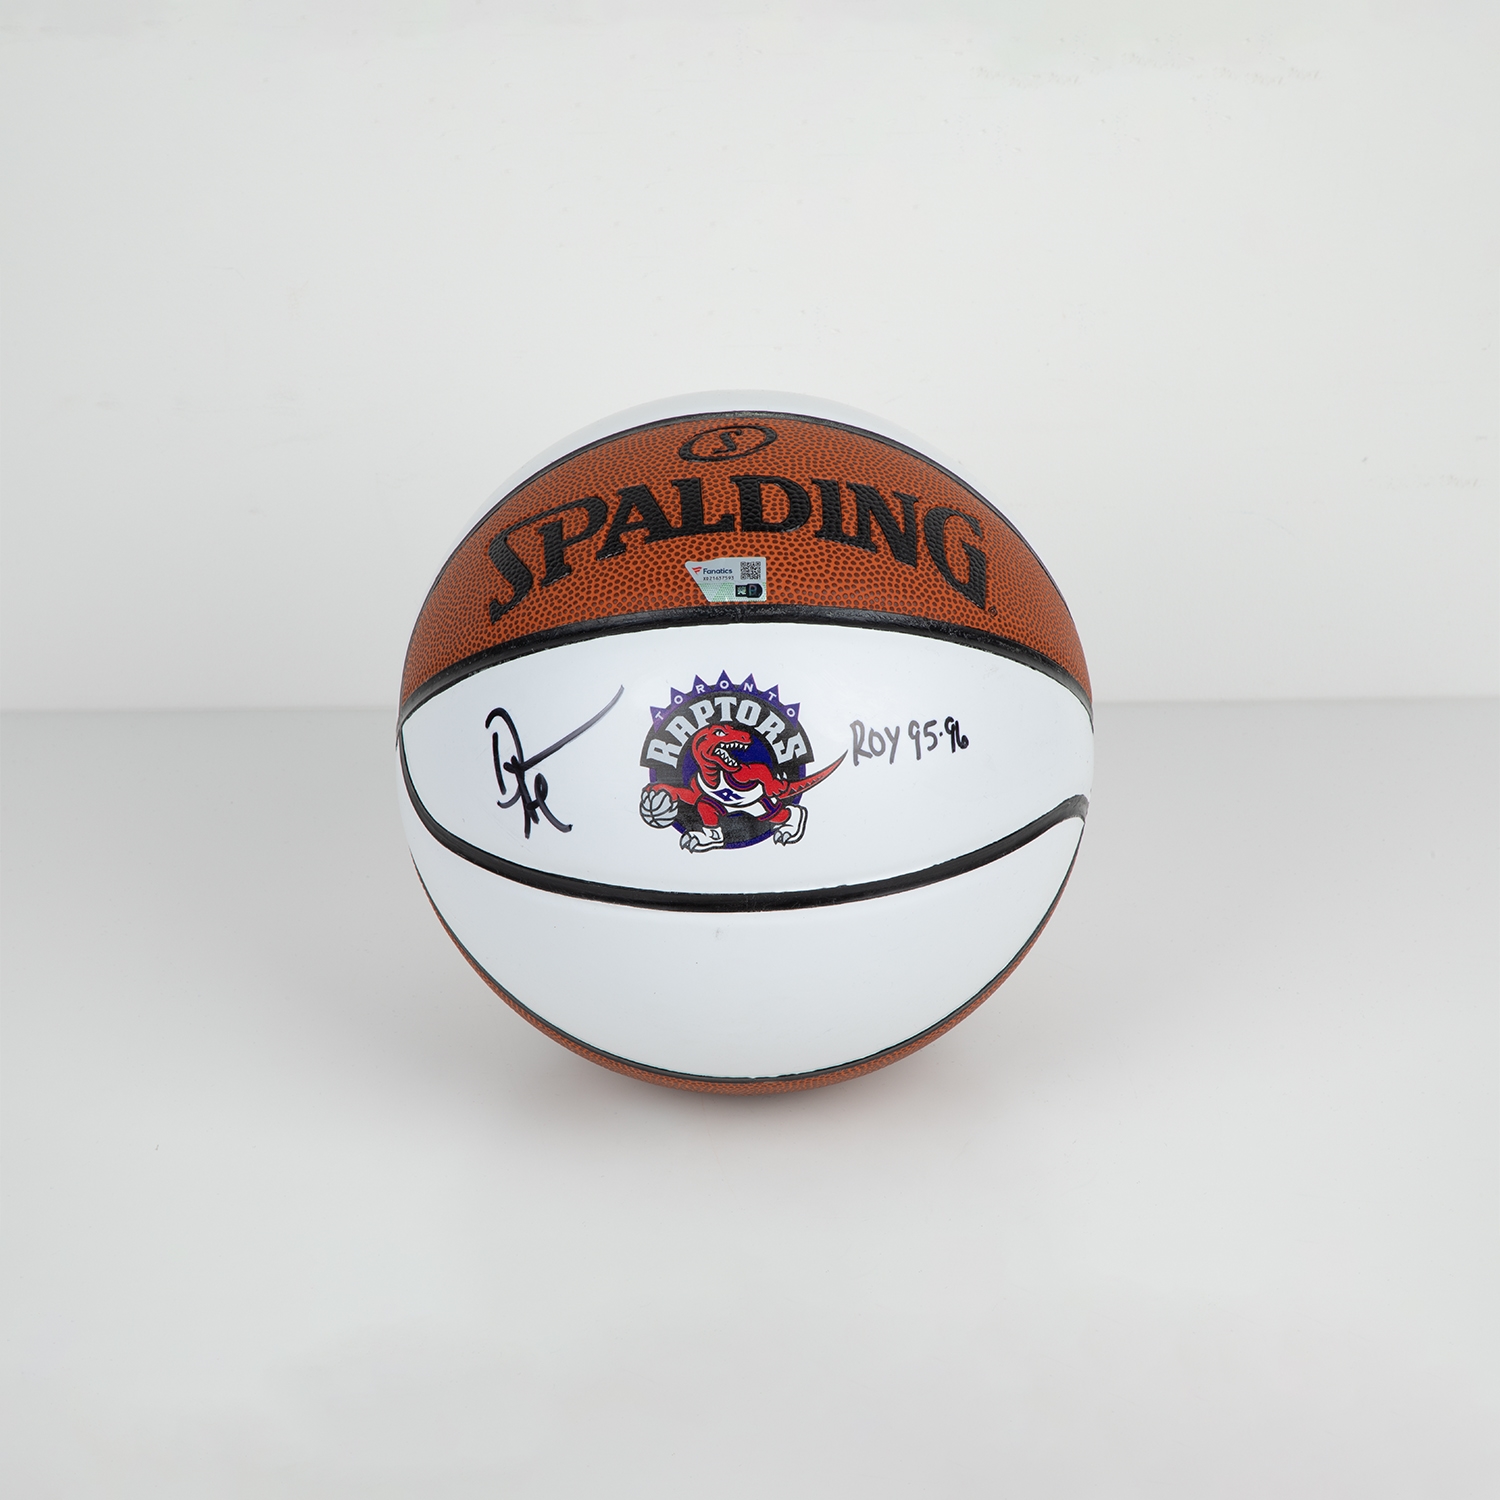 Damon Stoudamire Signed Toronto Raptors Spalding Basketball with ROY Note